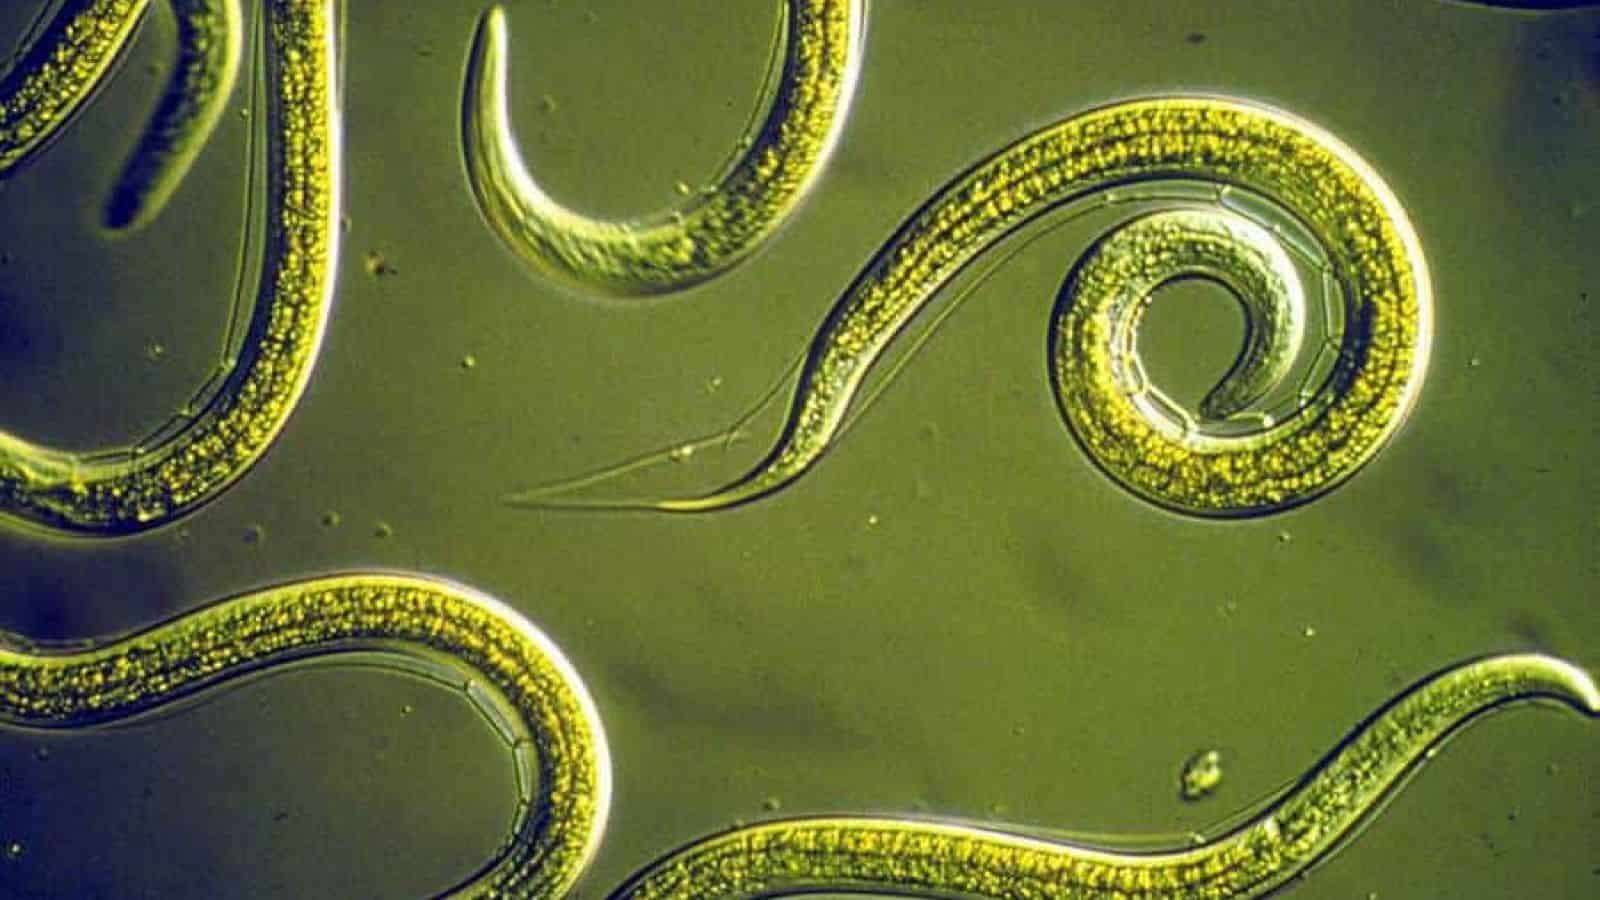 Caenorohabditis elegans under the microscope